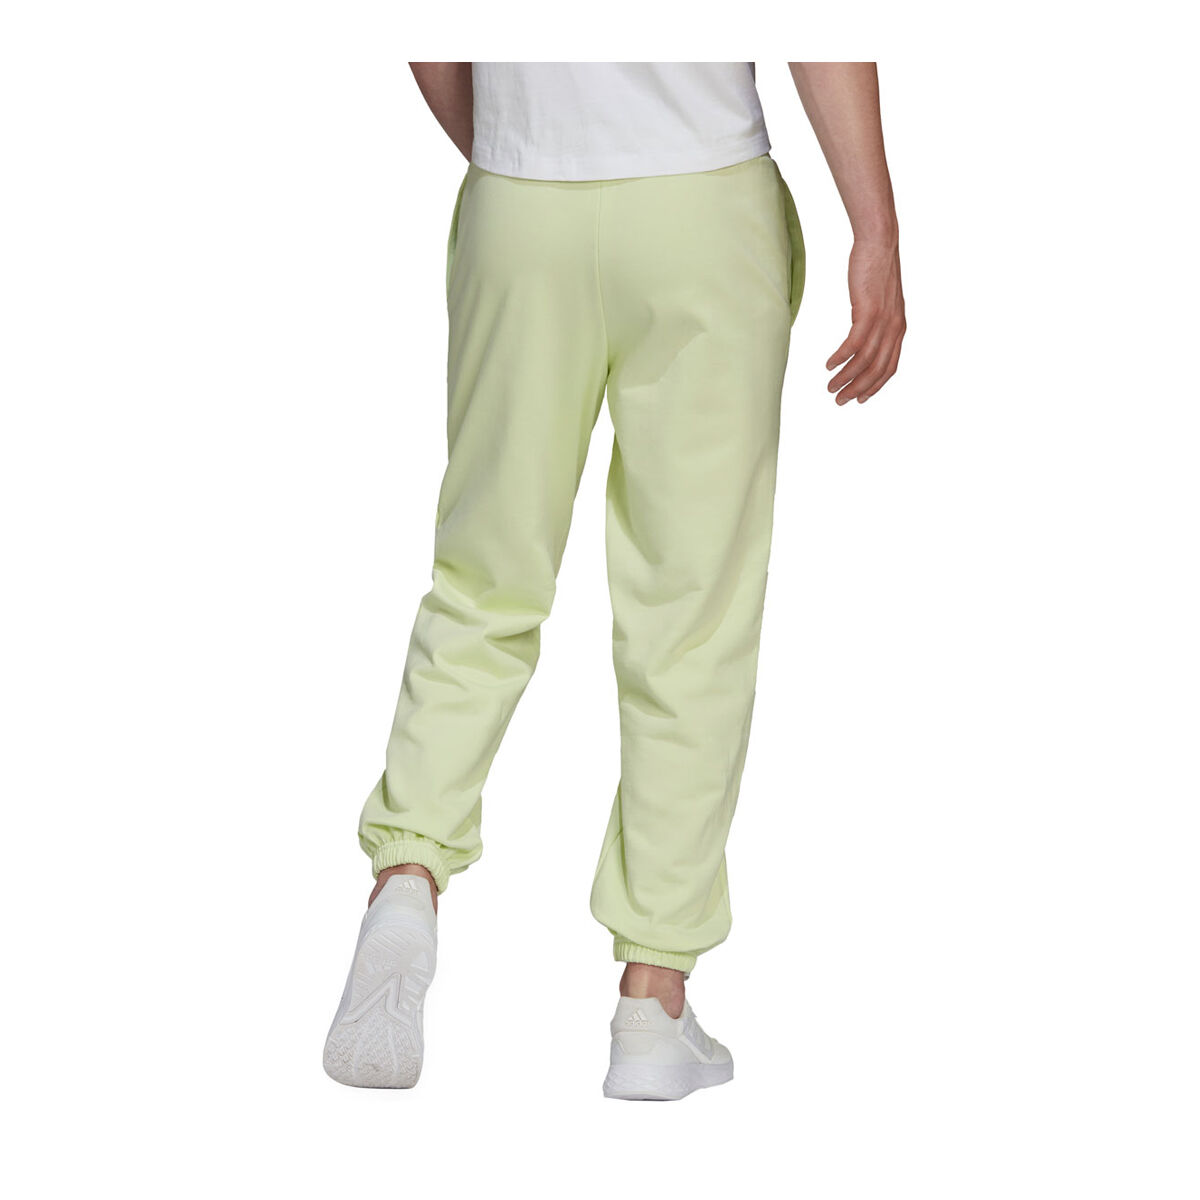 adidas  Pants  Jumpsuits  Lime Green Adidas Sweatpants  Poshmark